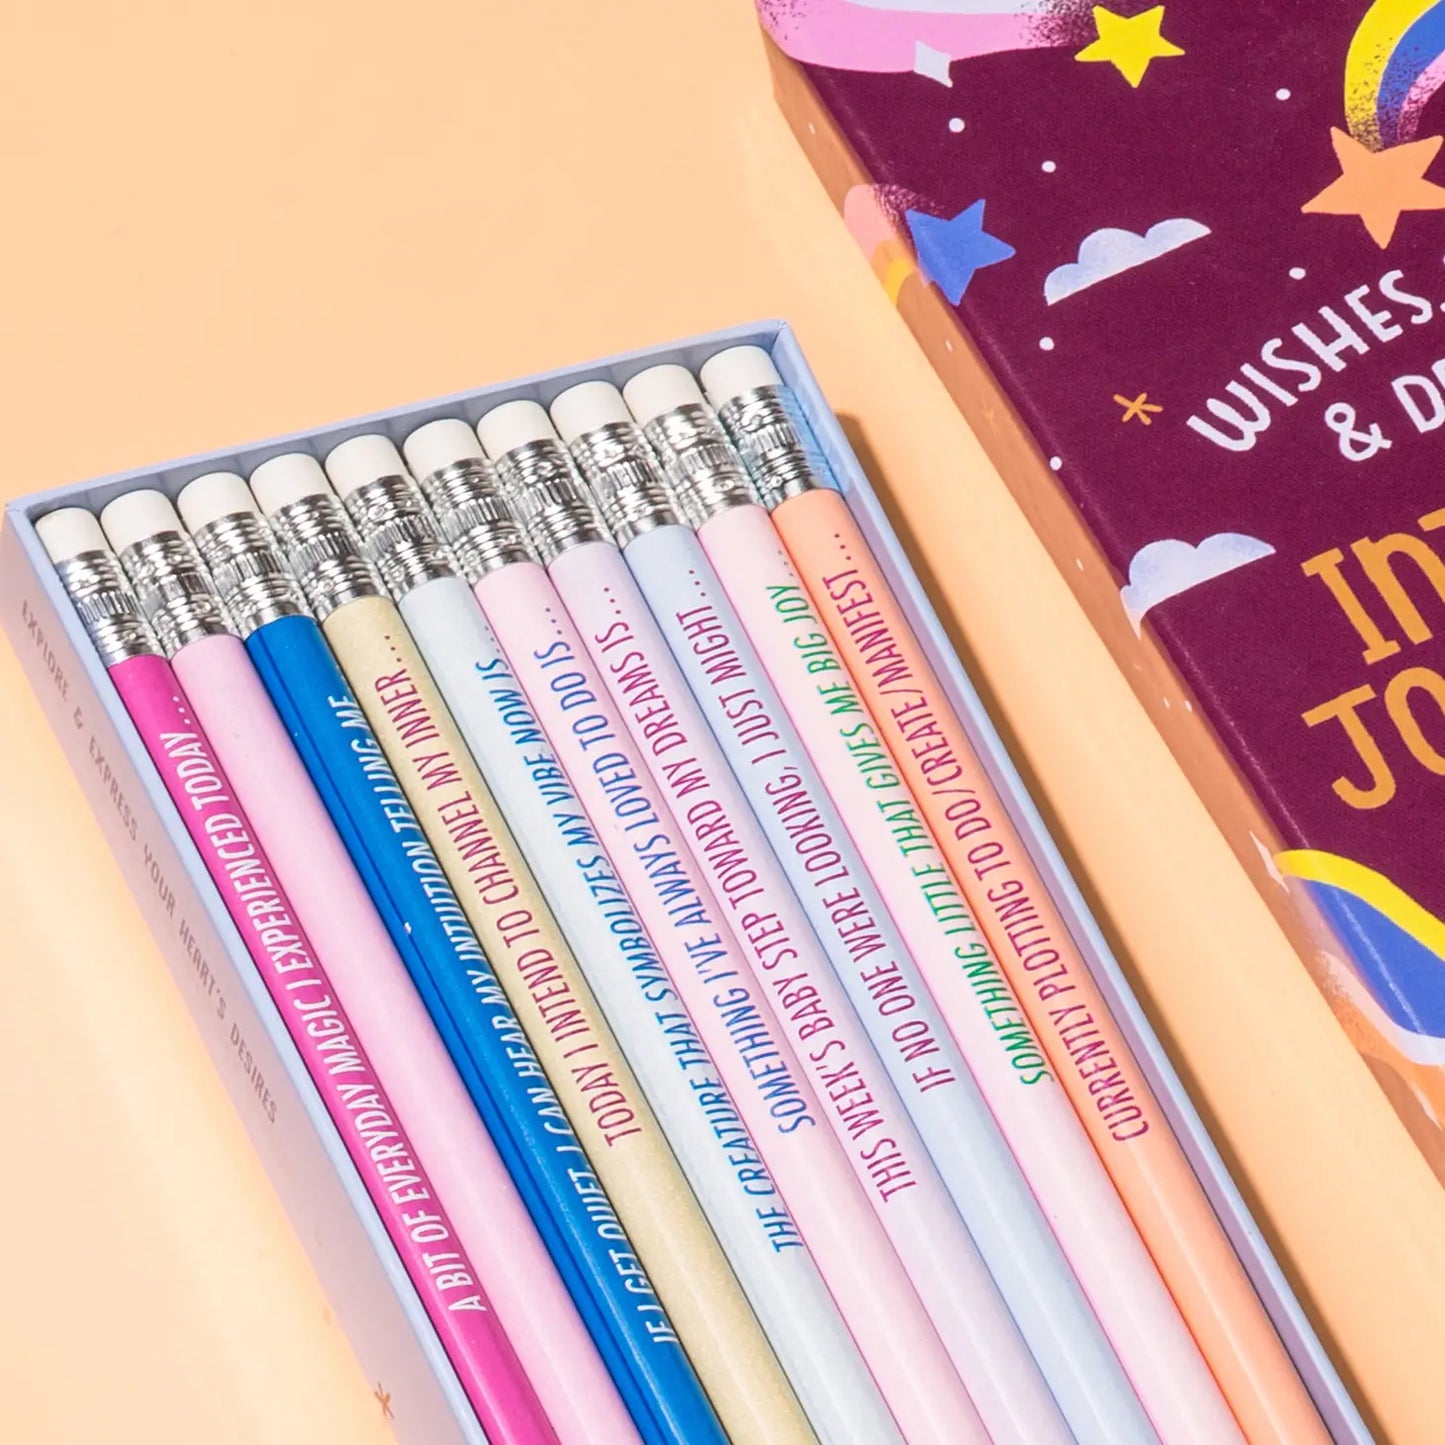 Em & Friends Wishes, Secrets, and Dreams, 10 Pencils Set